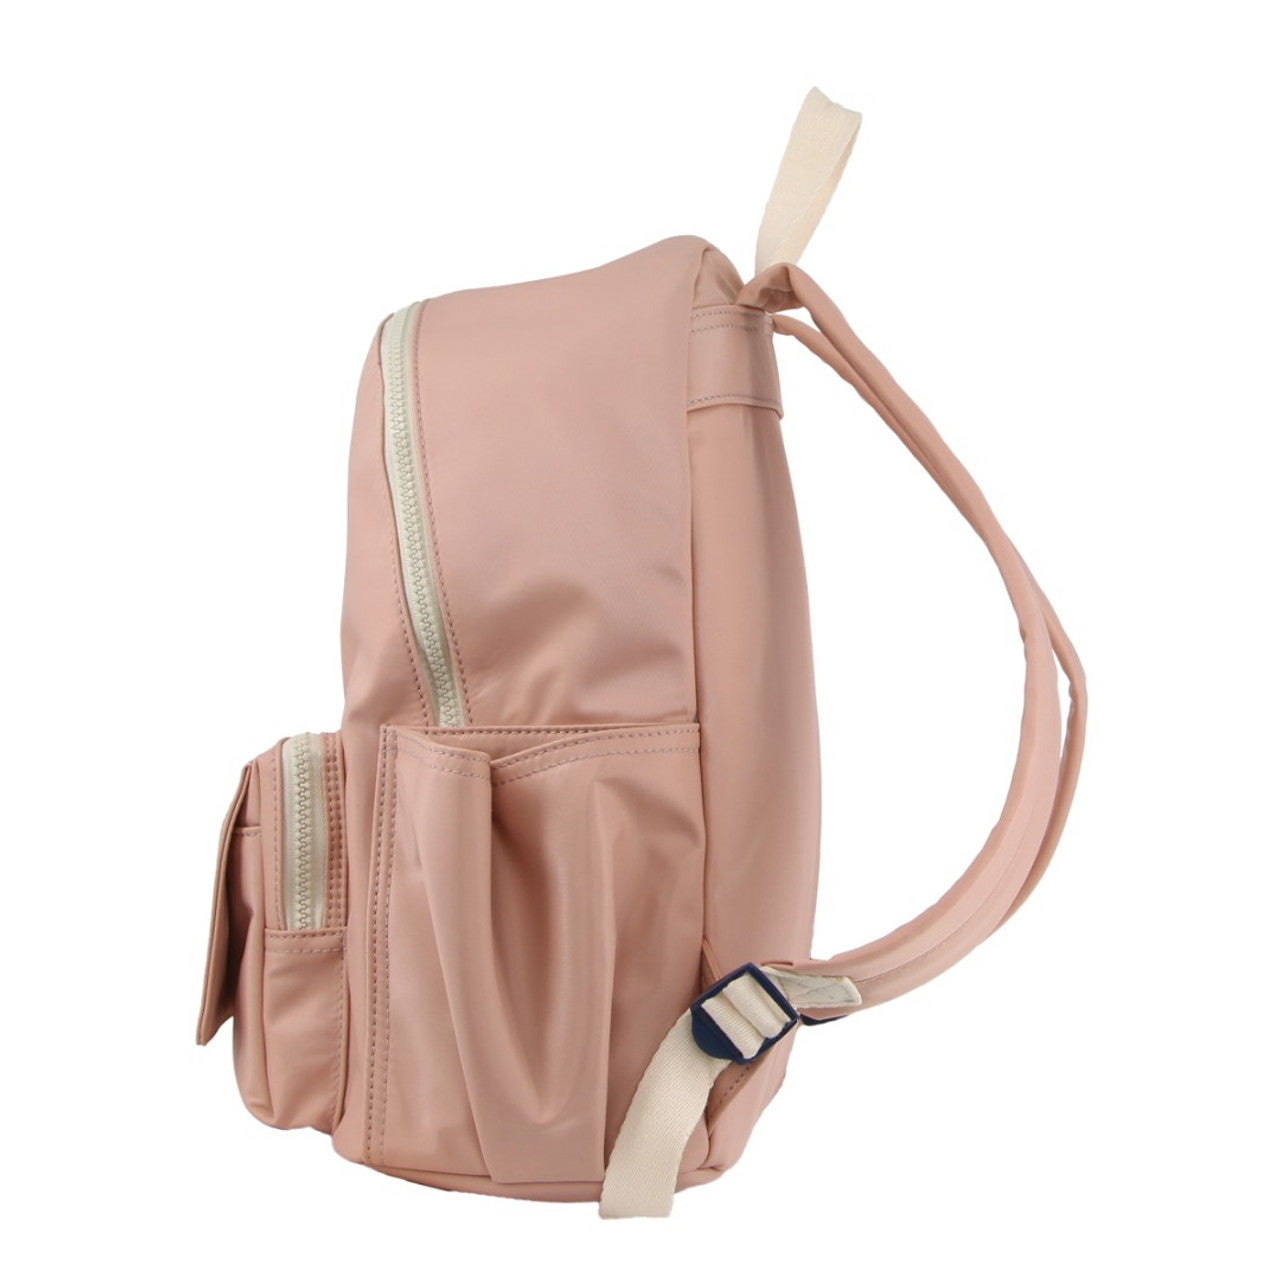 GAP - 11 Nylon Backpack front pocket - Blush-4